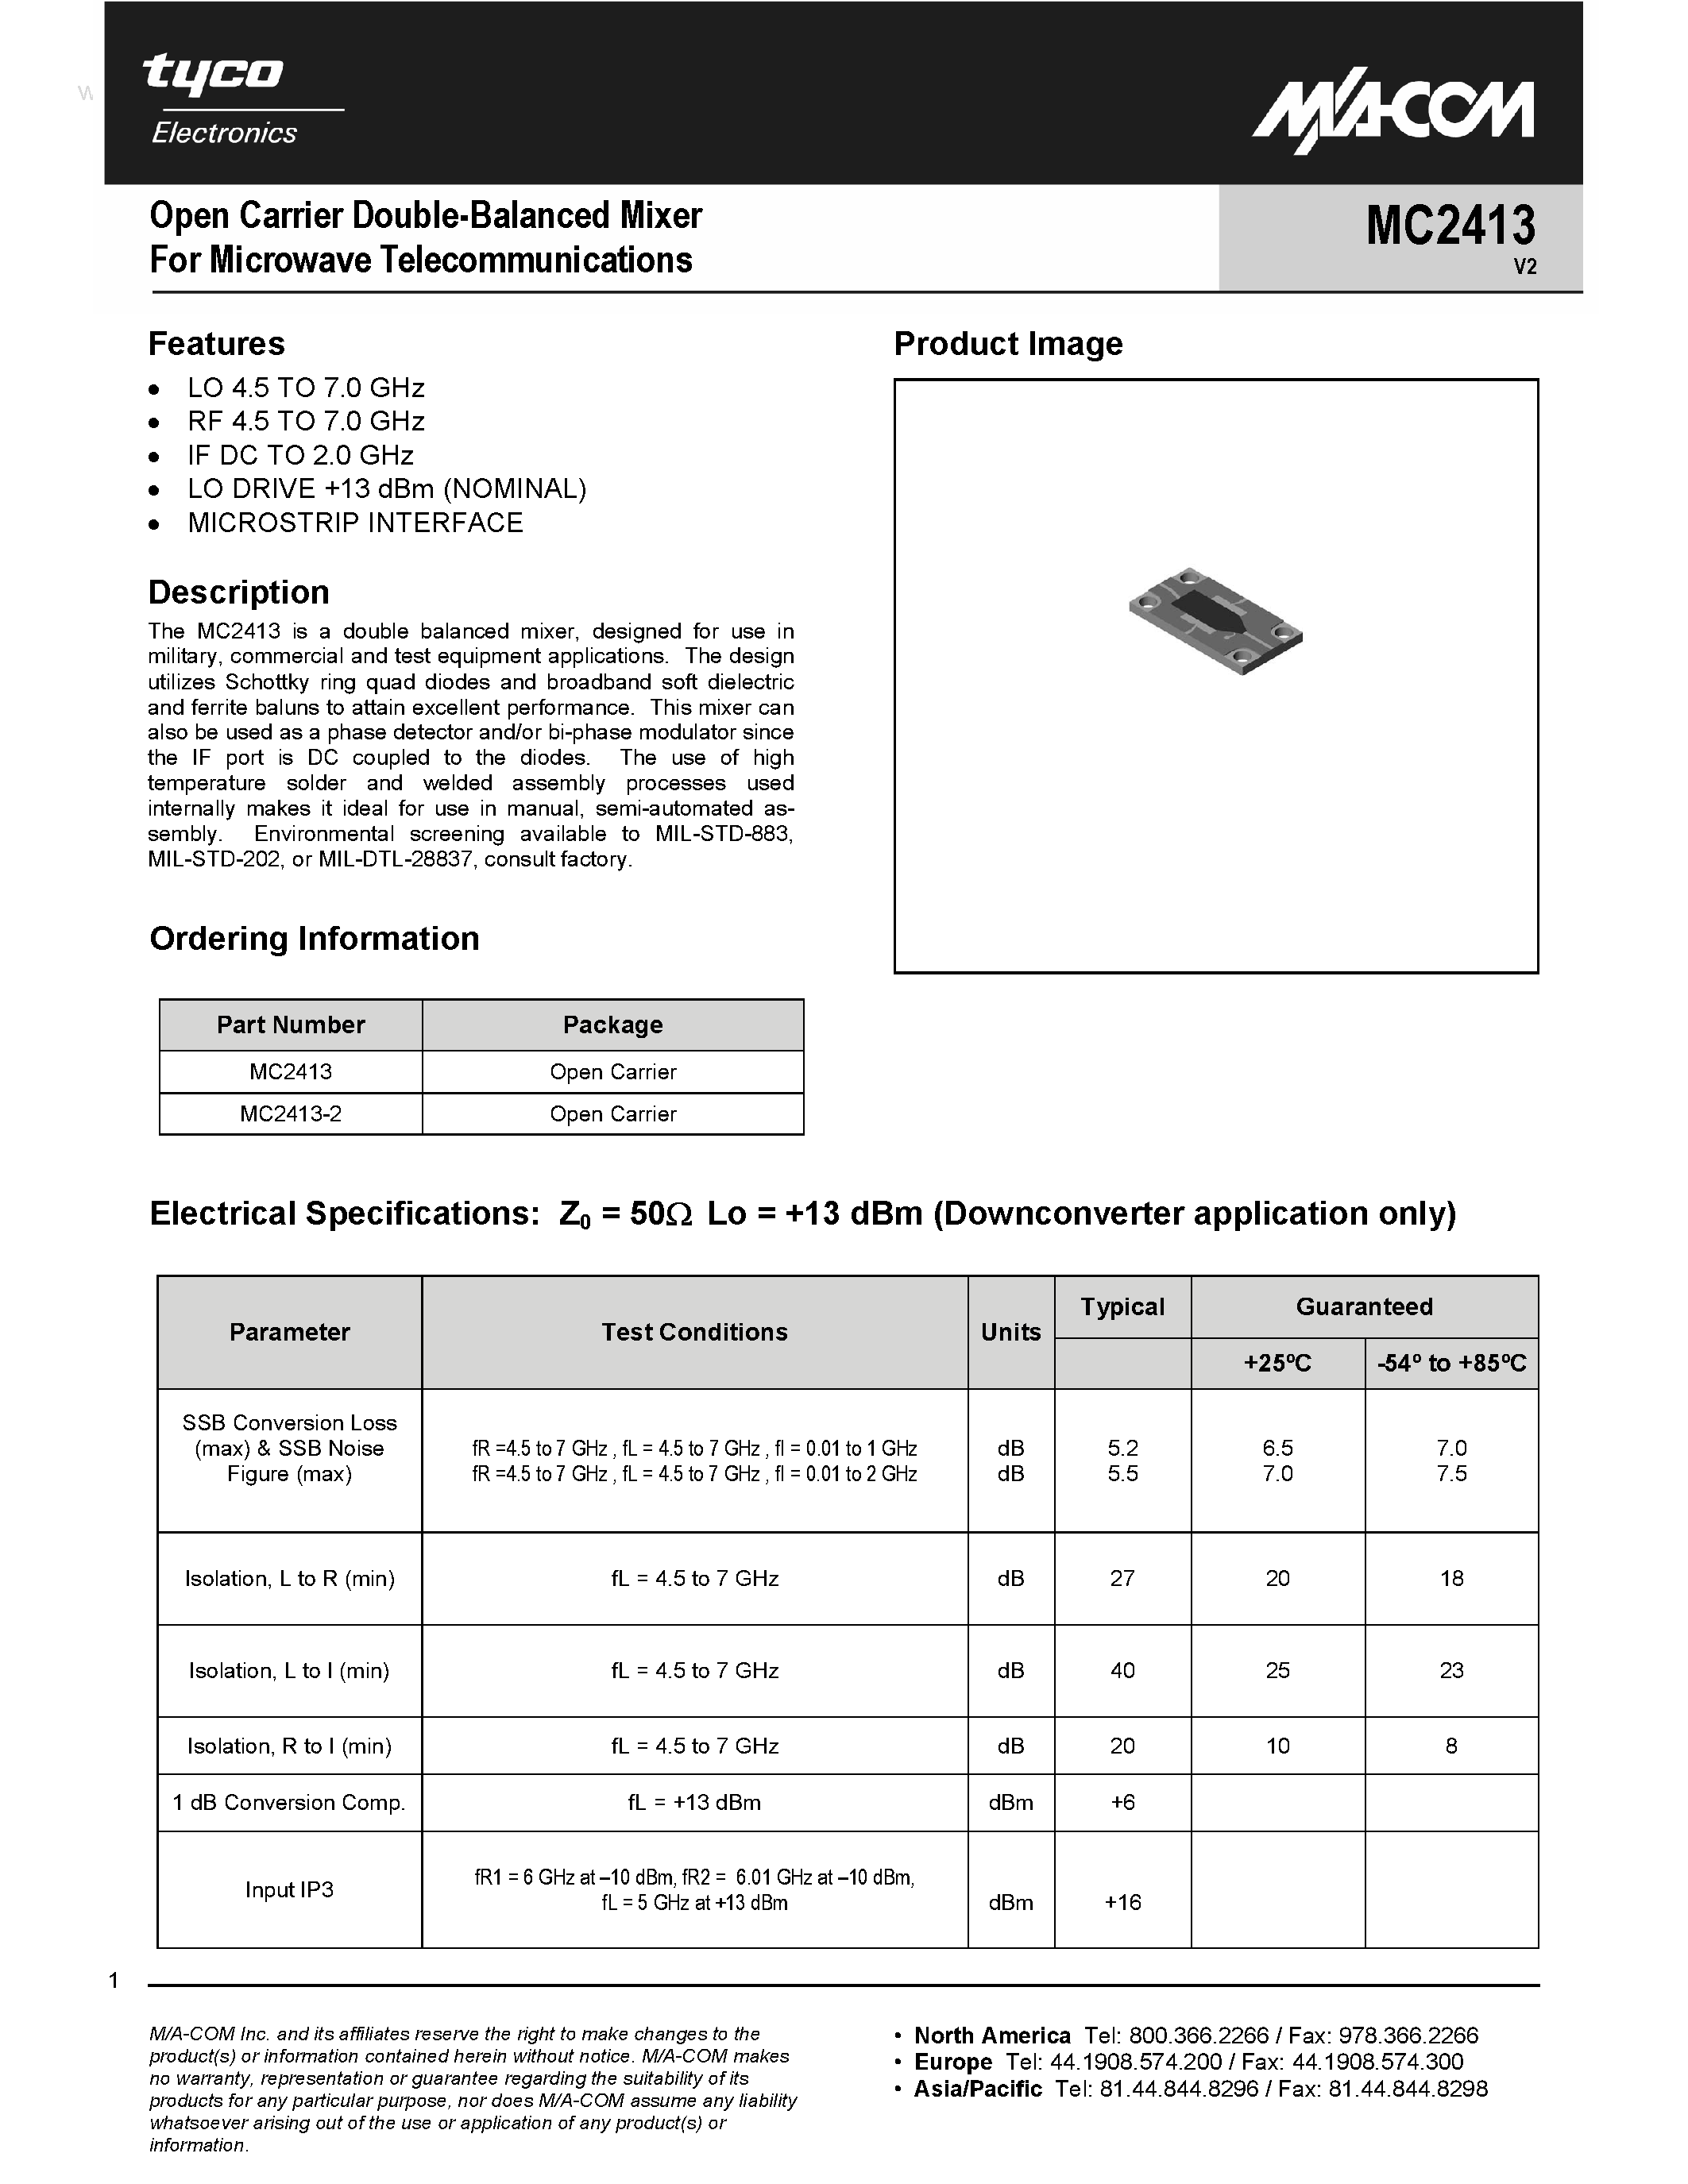 Datasheet MC2413 - Open Carrier Double-Balanced Mixer page 1